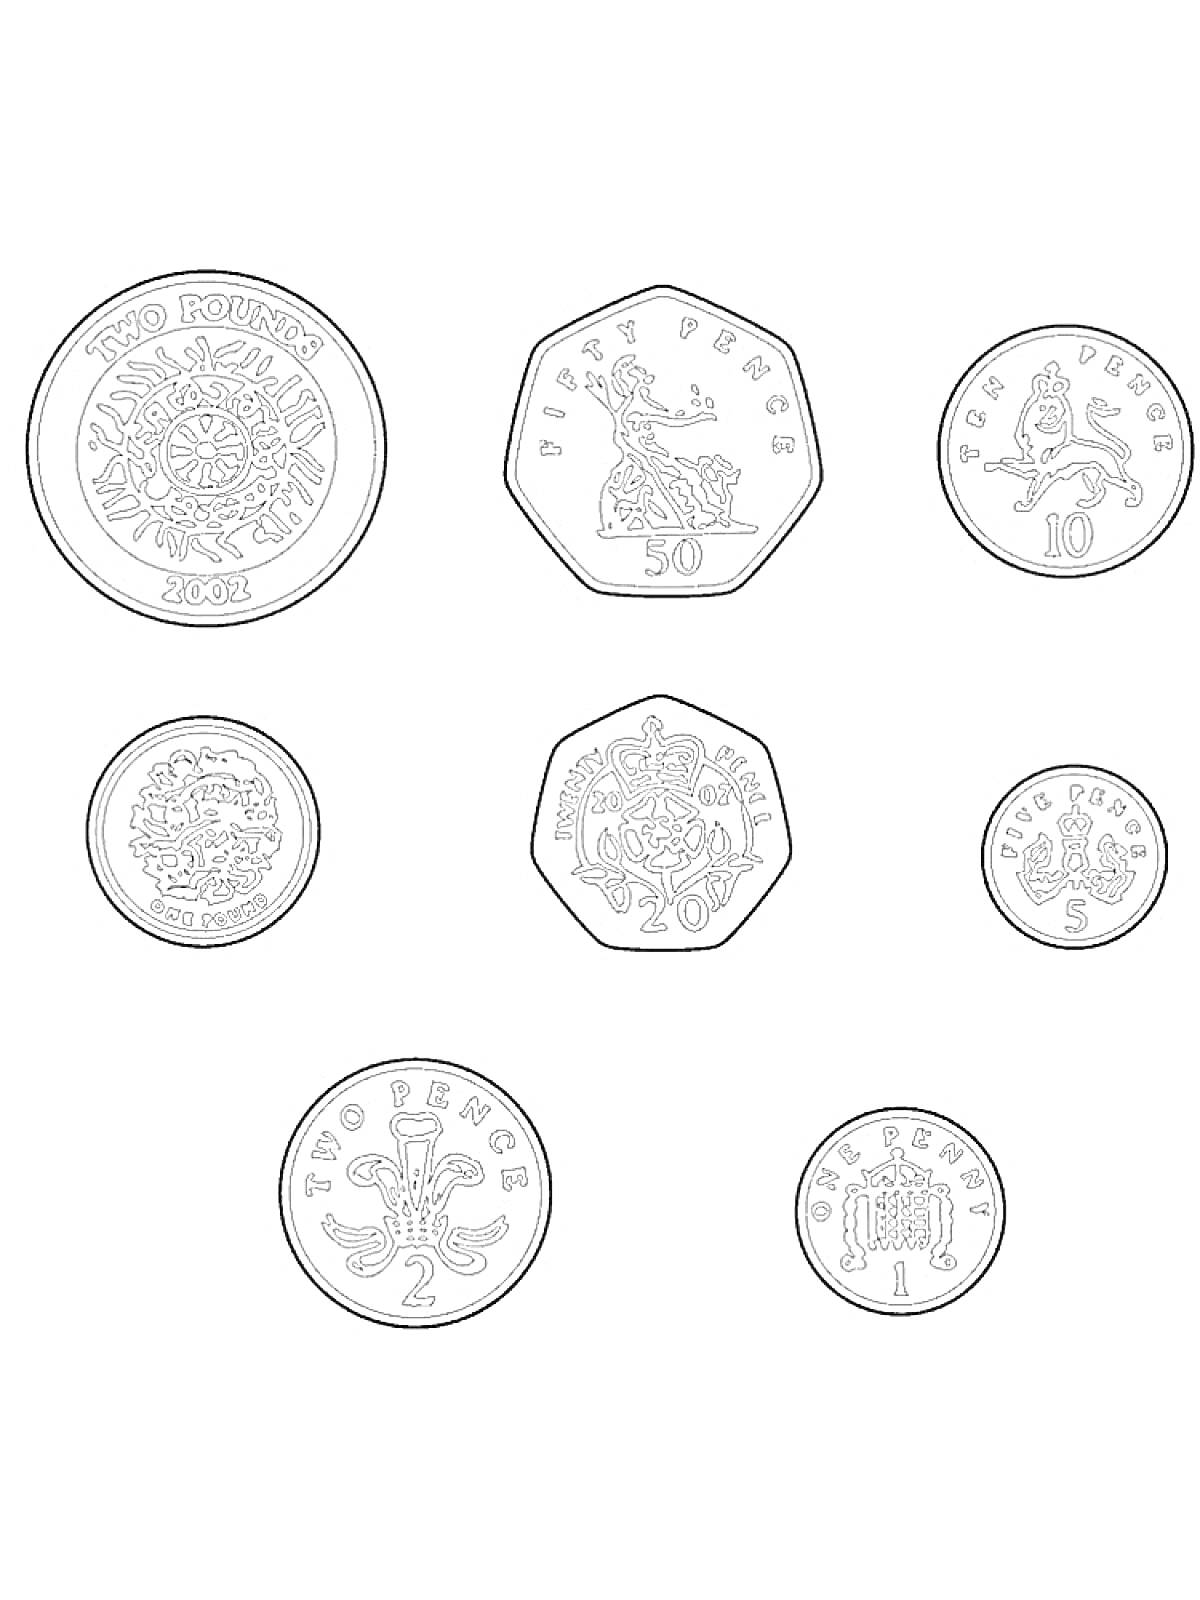 Раскраска Раскраска с изображением монет разного номинала: 2 фунта, 50 пенсов, 10 пенсов, 20 пенсов, 5 пенсов, 2 пенса и 1 пенс